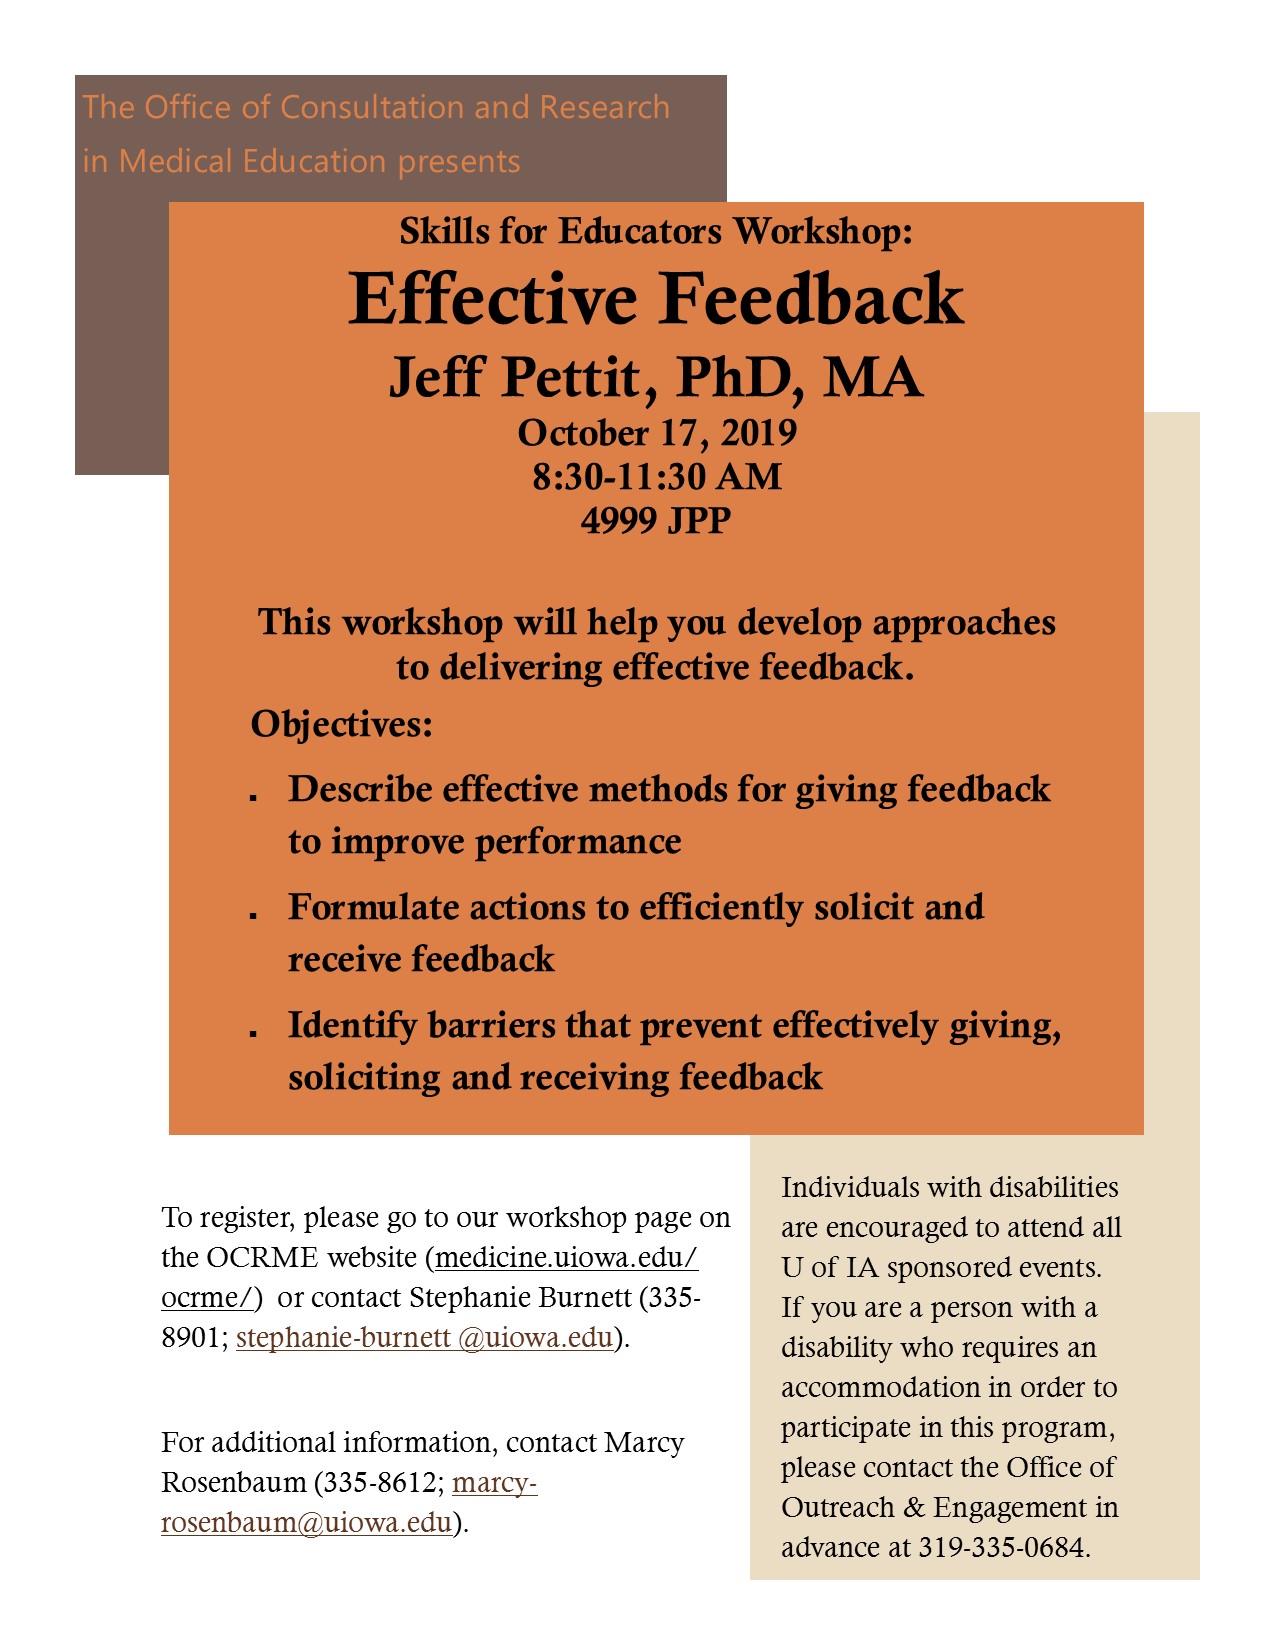 Skills for Educators Workship Series: Effective Feedback promotional image